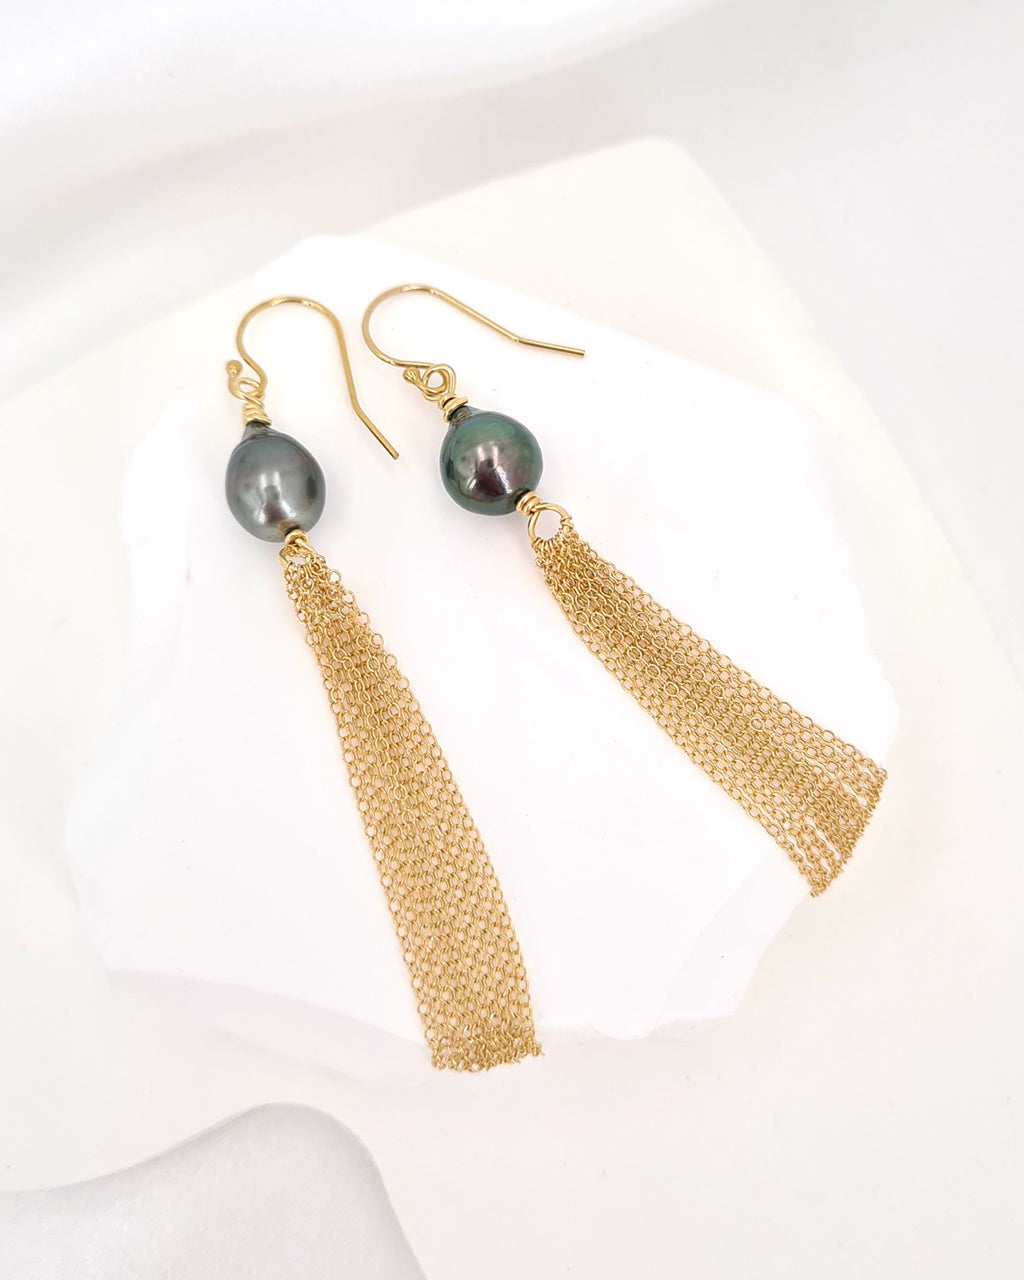 Tahitian Pearl Earrings | Tahitian Pearl Tassel Earrings in 14k Gold Filled Handmade in Singapore